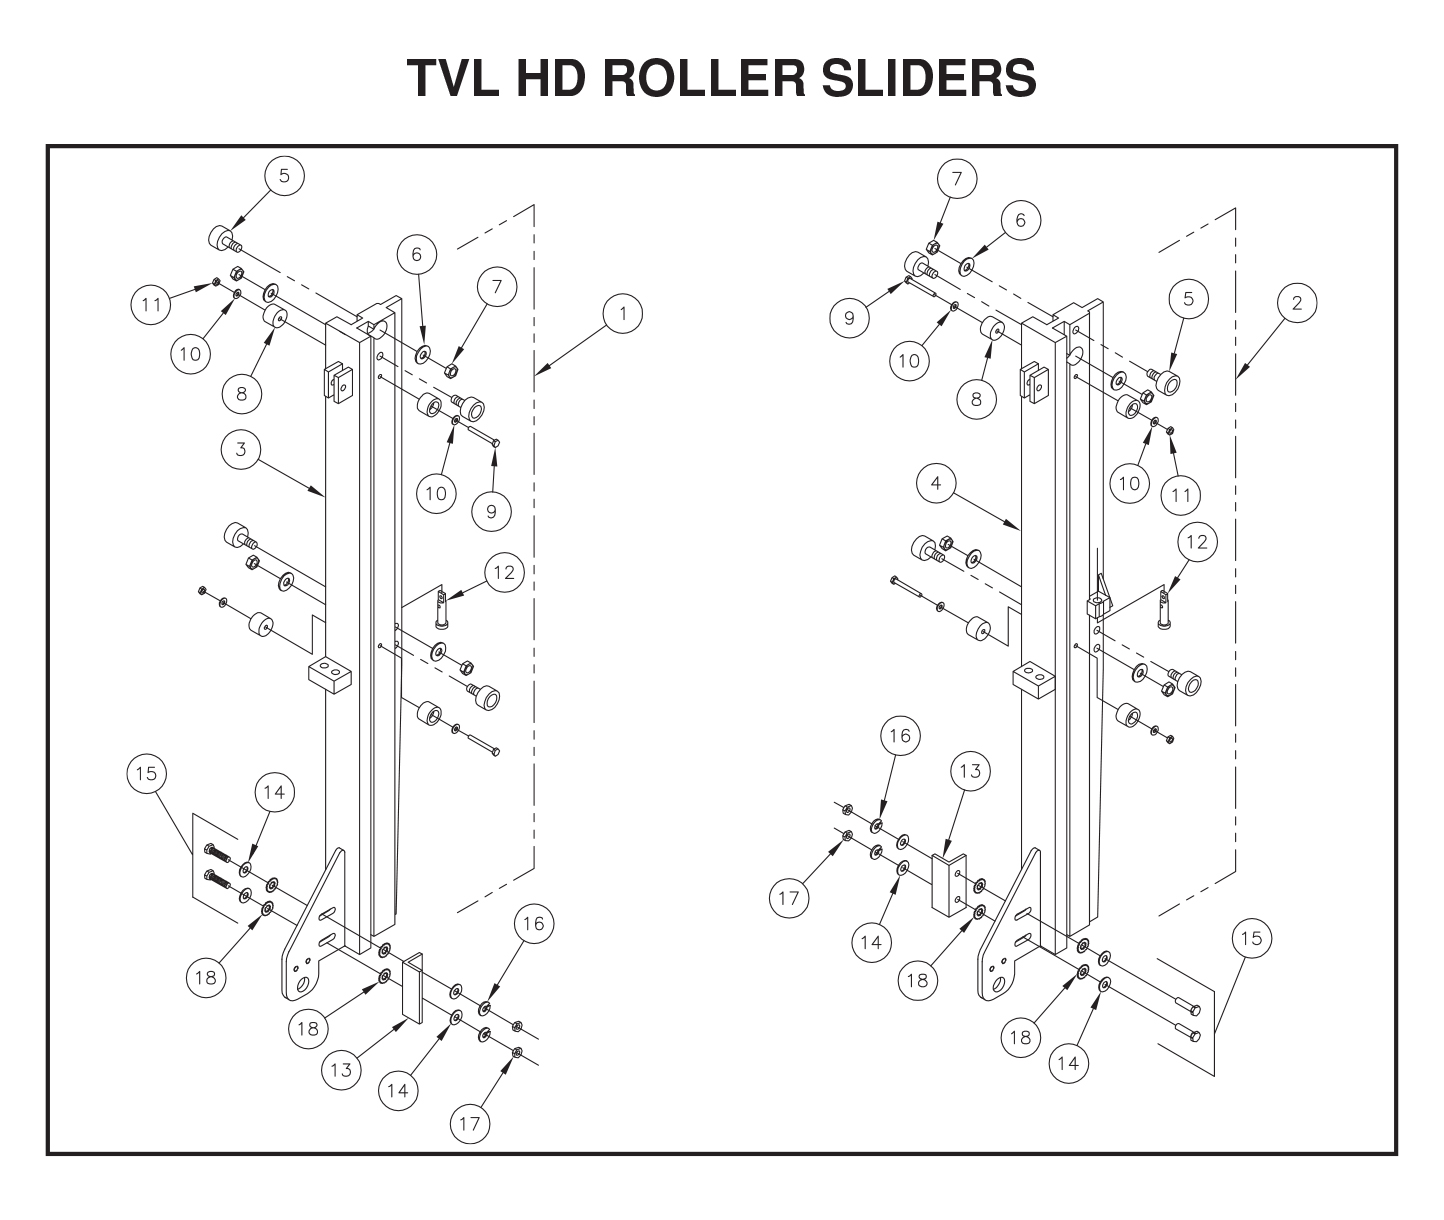 All-Aluminum TVL Series HD Roller Sliders Diagram